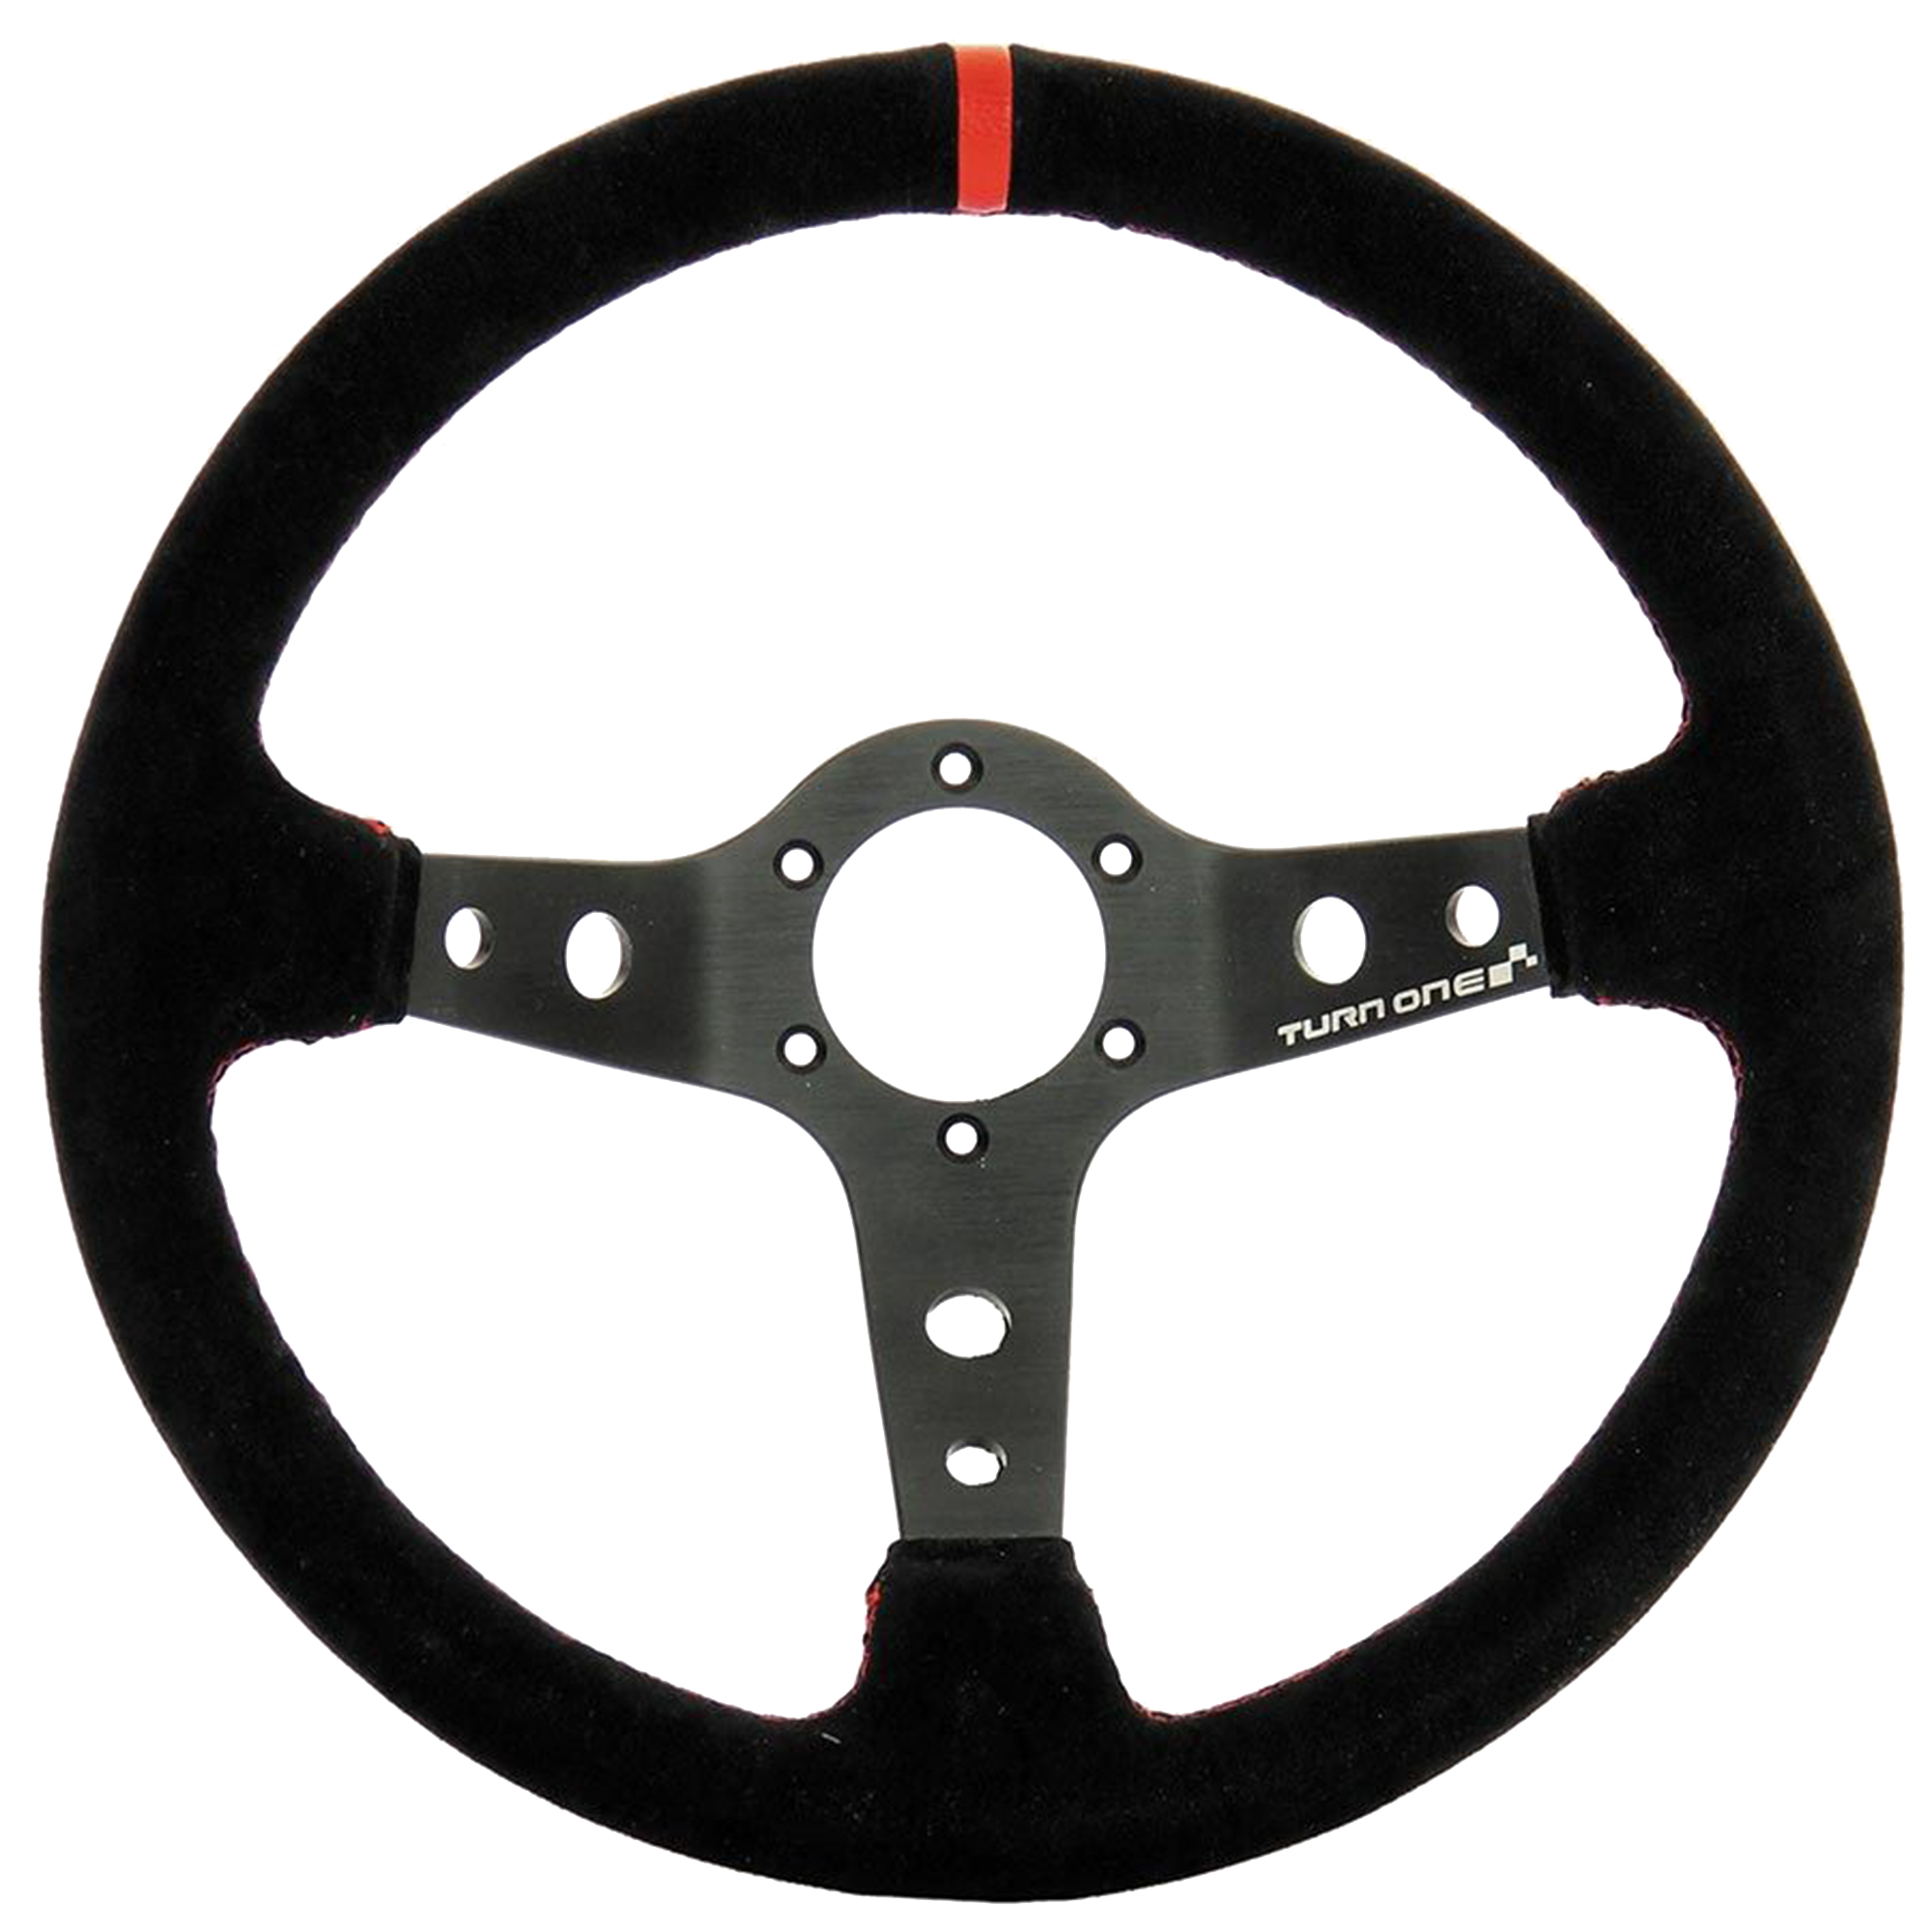 Turn One Steering wheel for Rallye and Drift